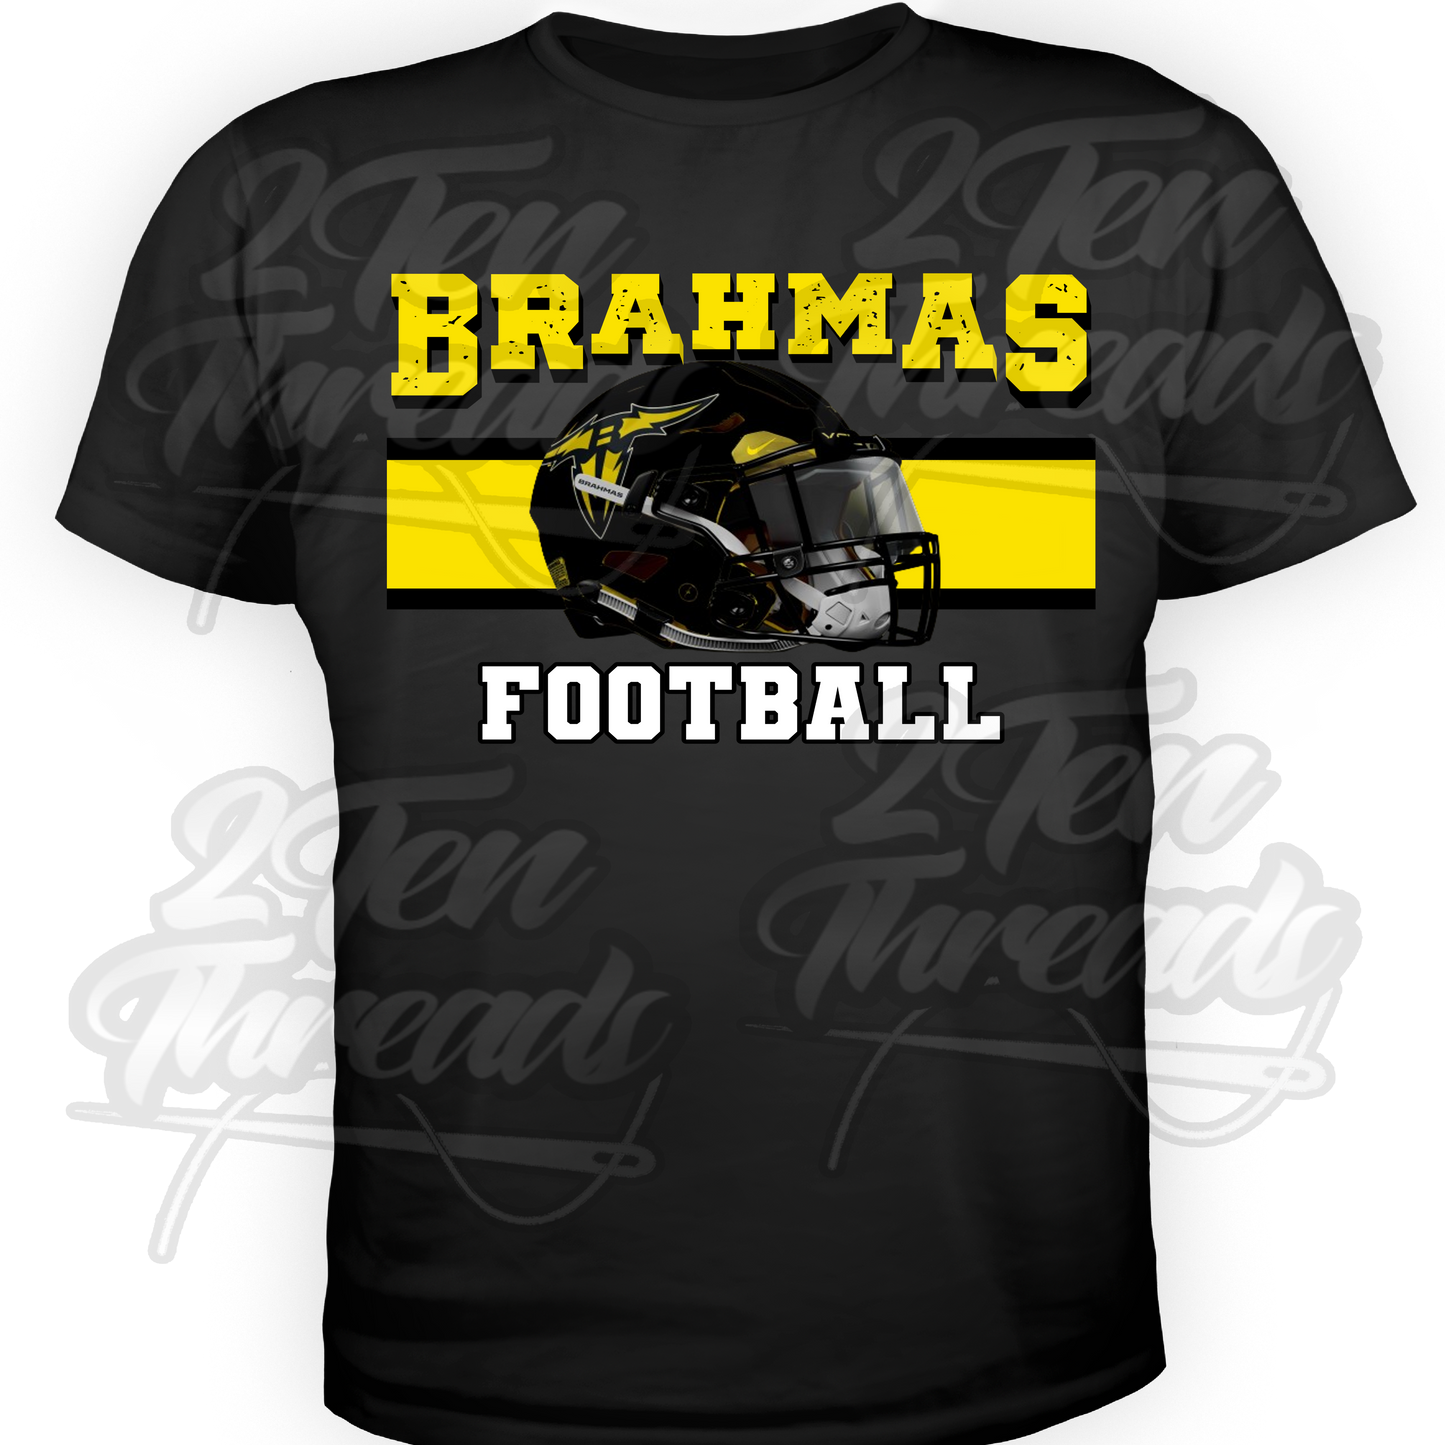 Brahmas Football shirt